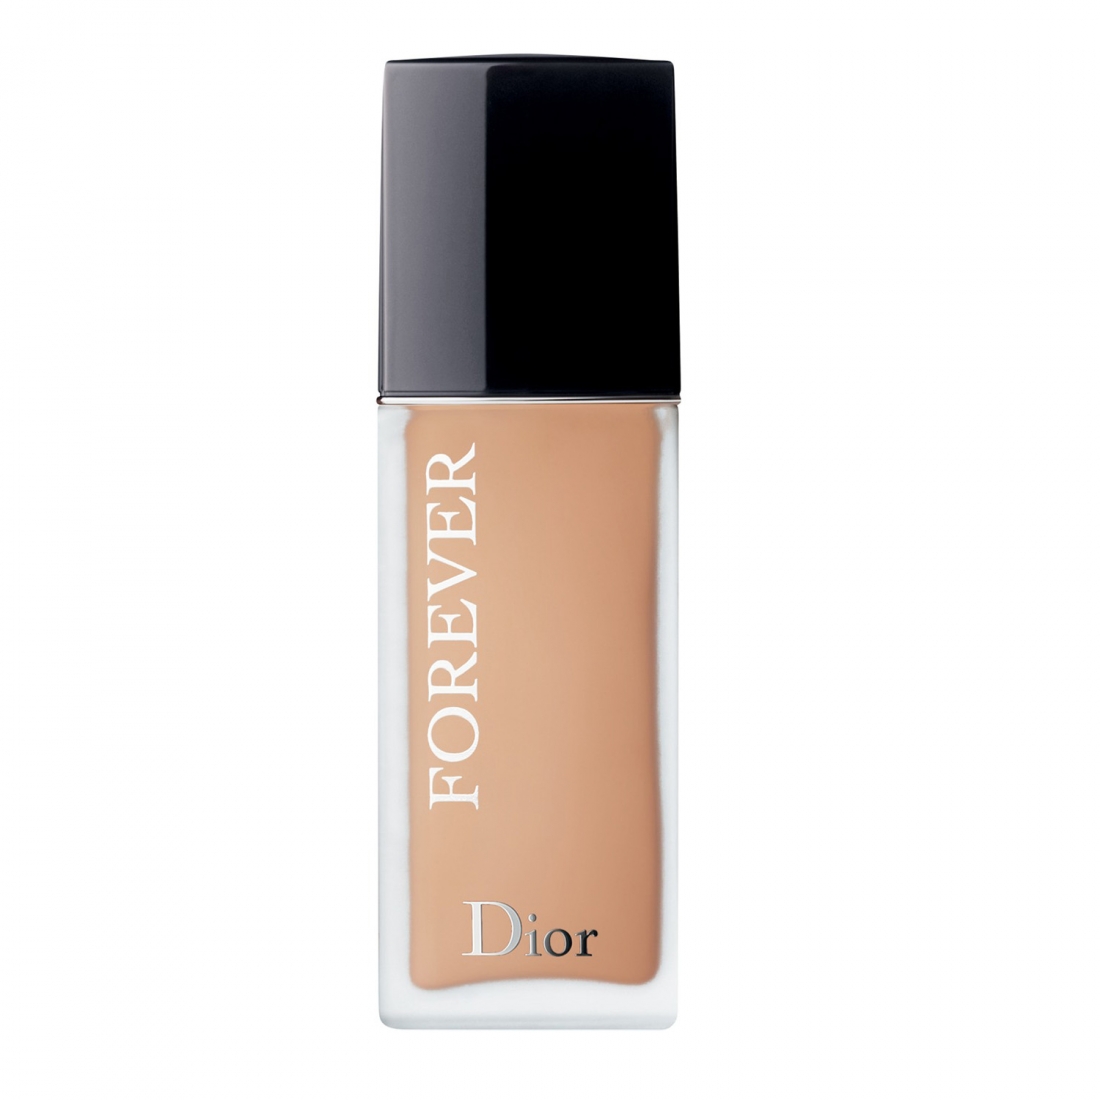 'Dior Forever' Foundation - 2.5N Neutral 30 ml